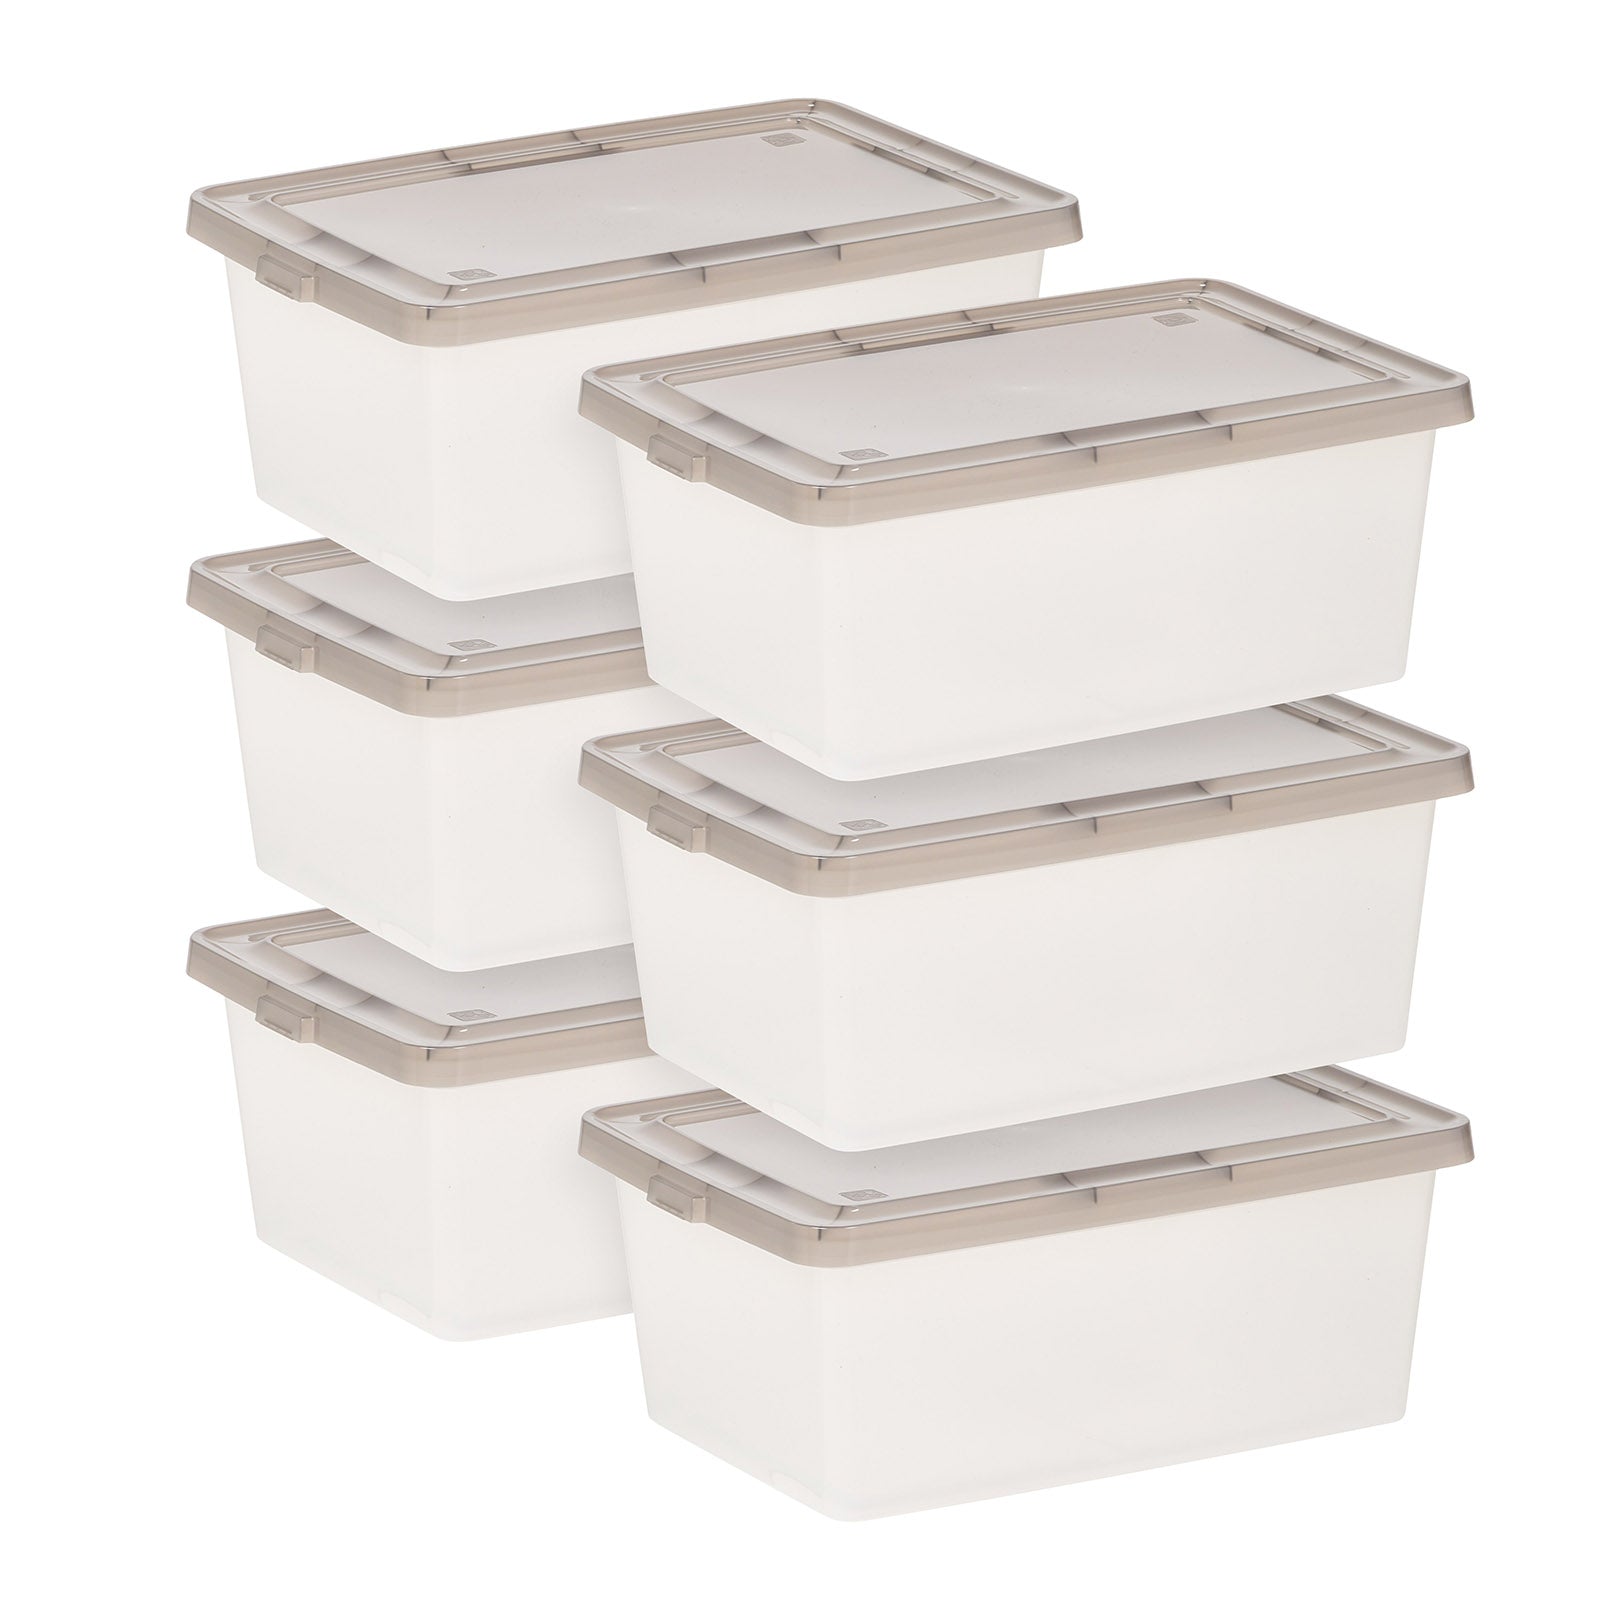 Iris USA 19 Quart Stack & Pull Clear Plastic Storage Box, Gray, 5 Pack